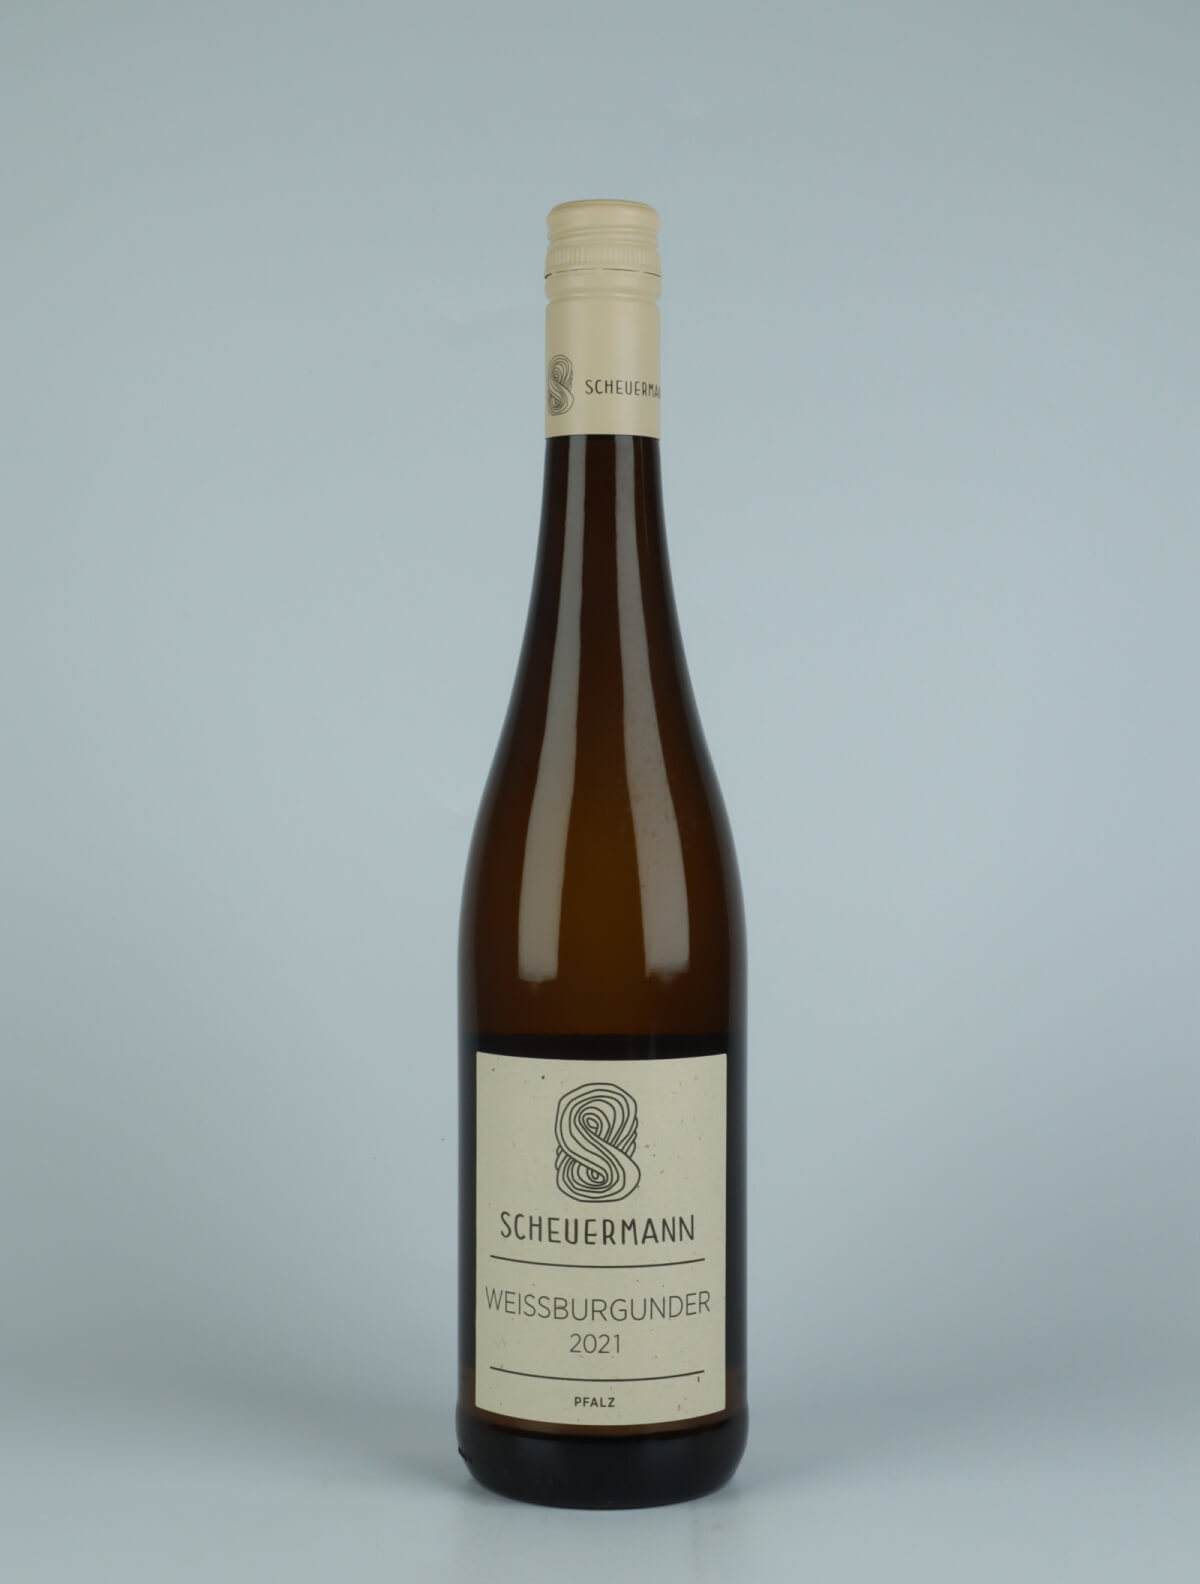 A bottle 2021 Weissburgunder Trocken White wine from Weingut Scheuermann, Pfalz in Germany